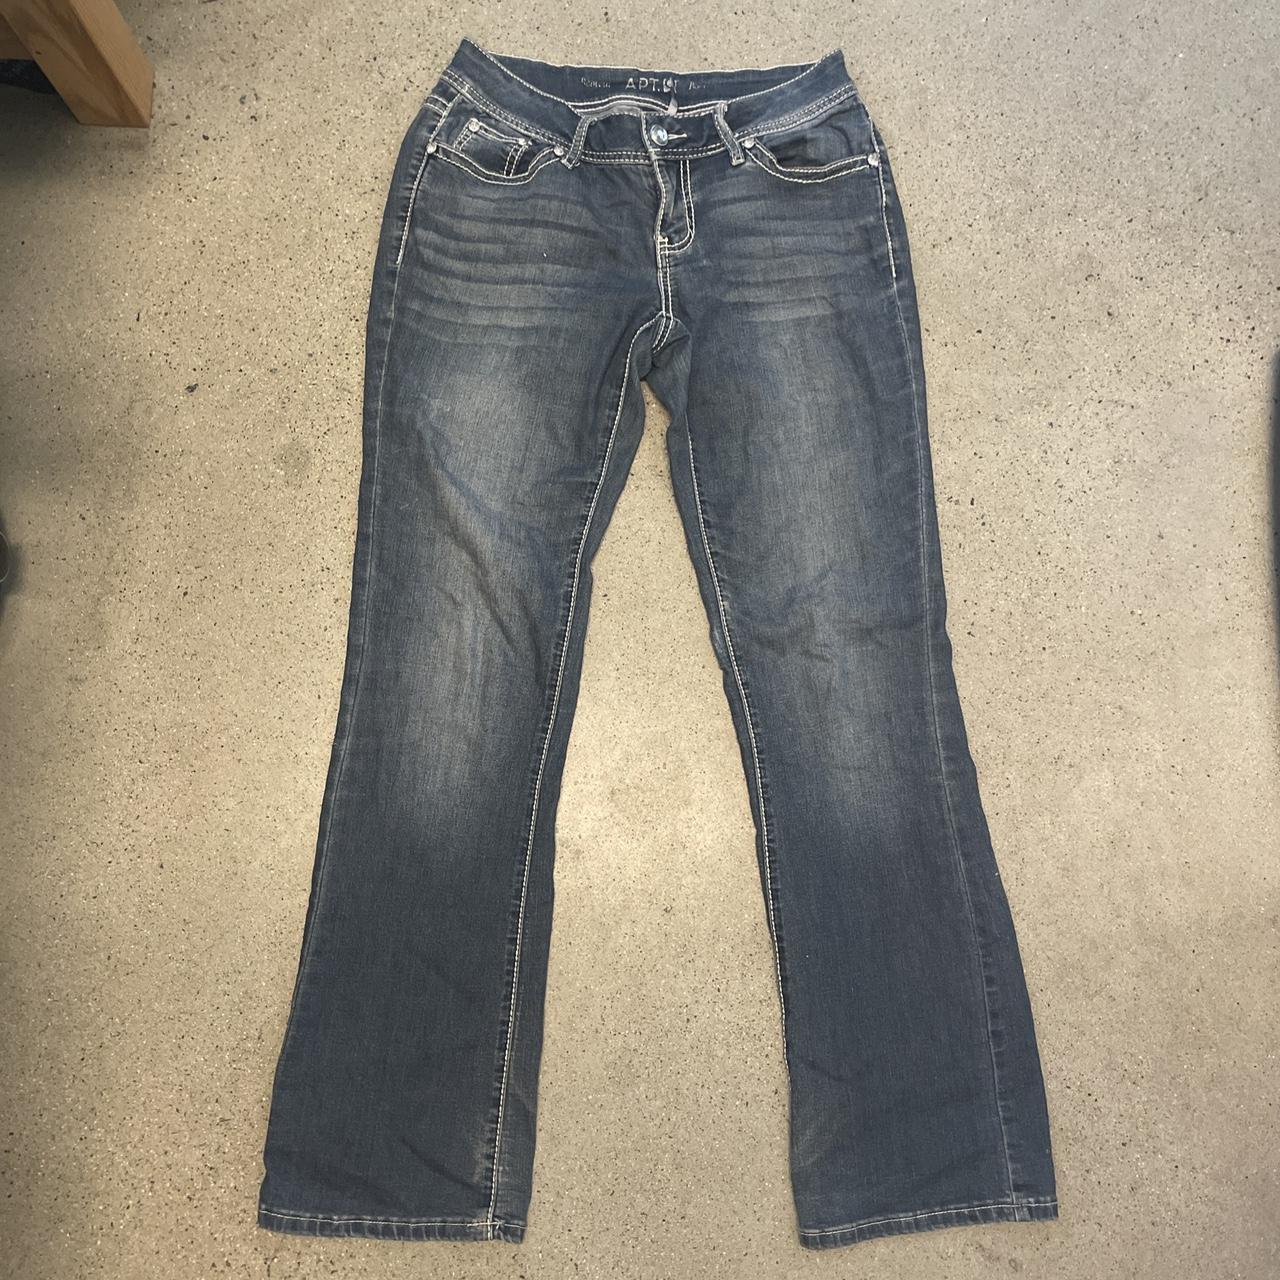 Apt. 9 Rhinestone Boot Cut Jeans